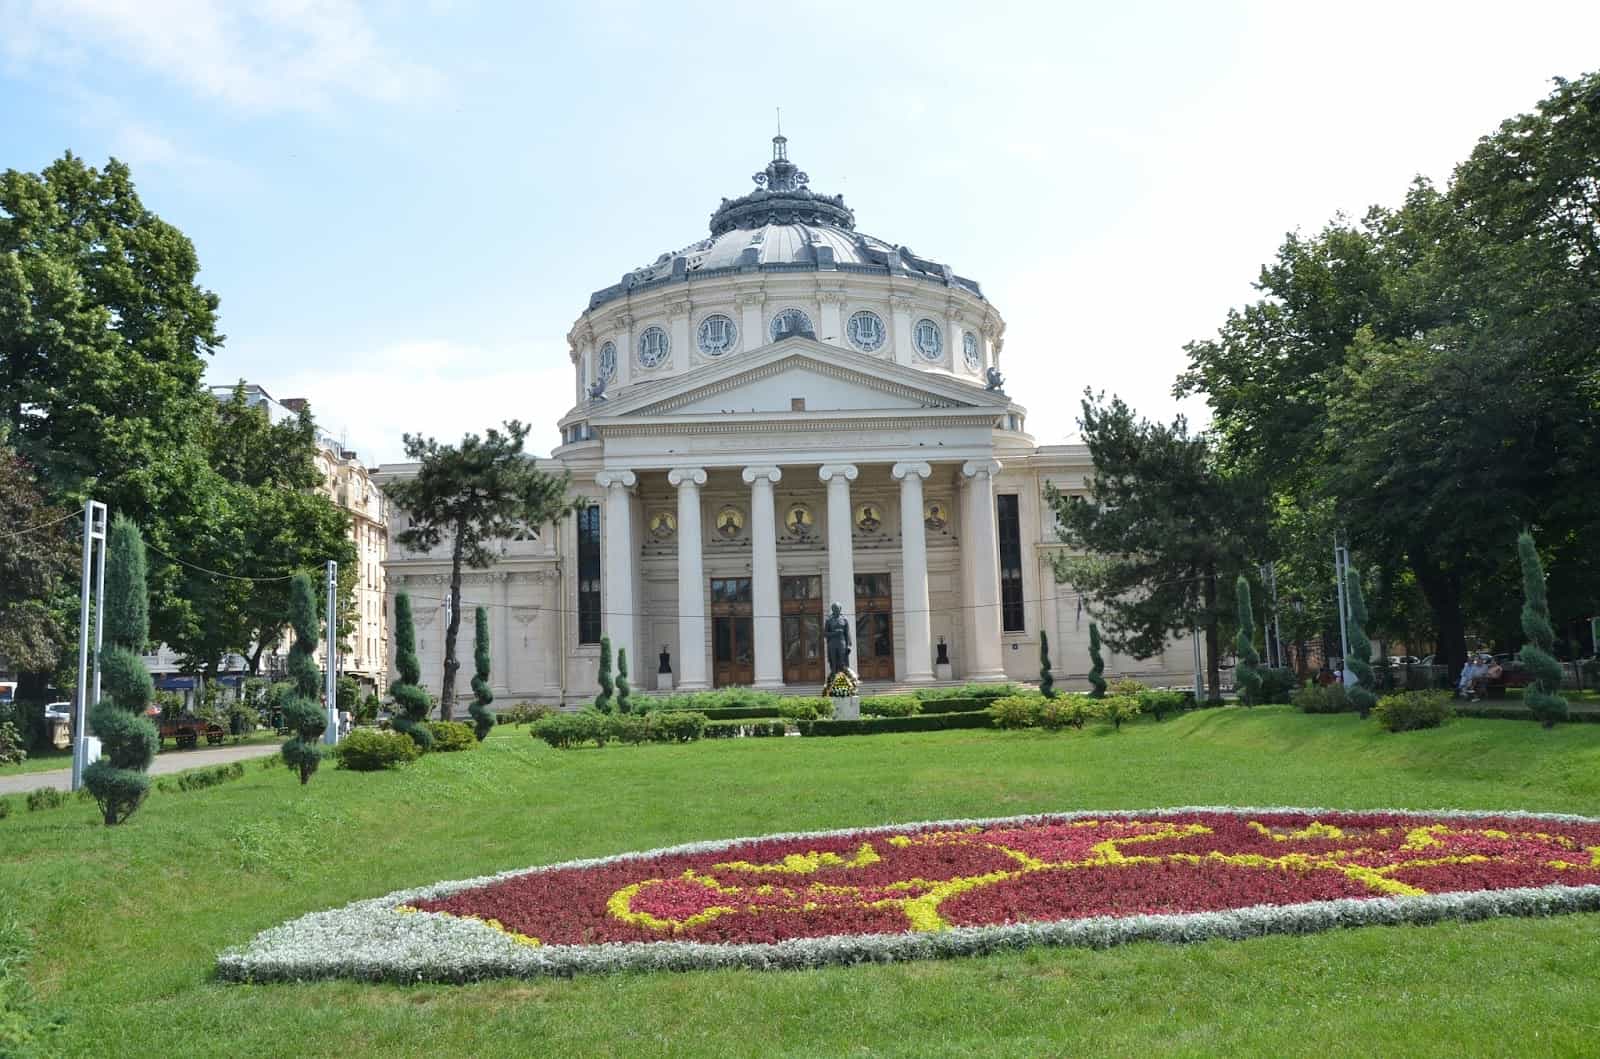 Ateneul Român in Bucharest, Romania